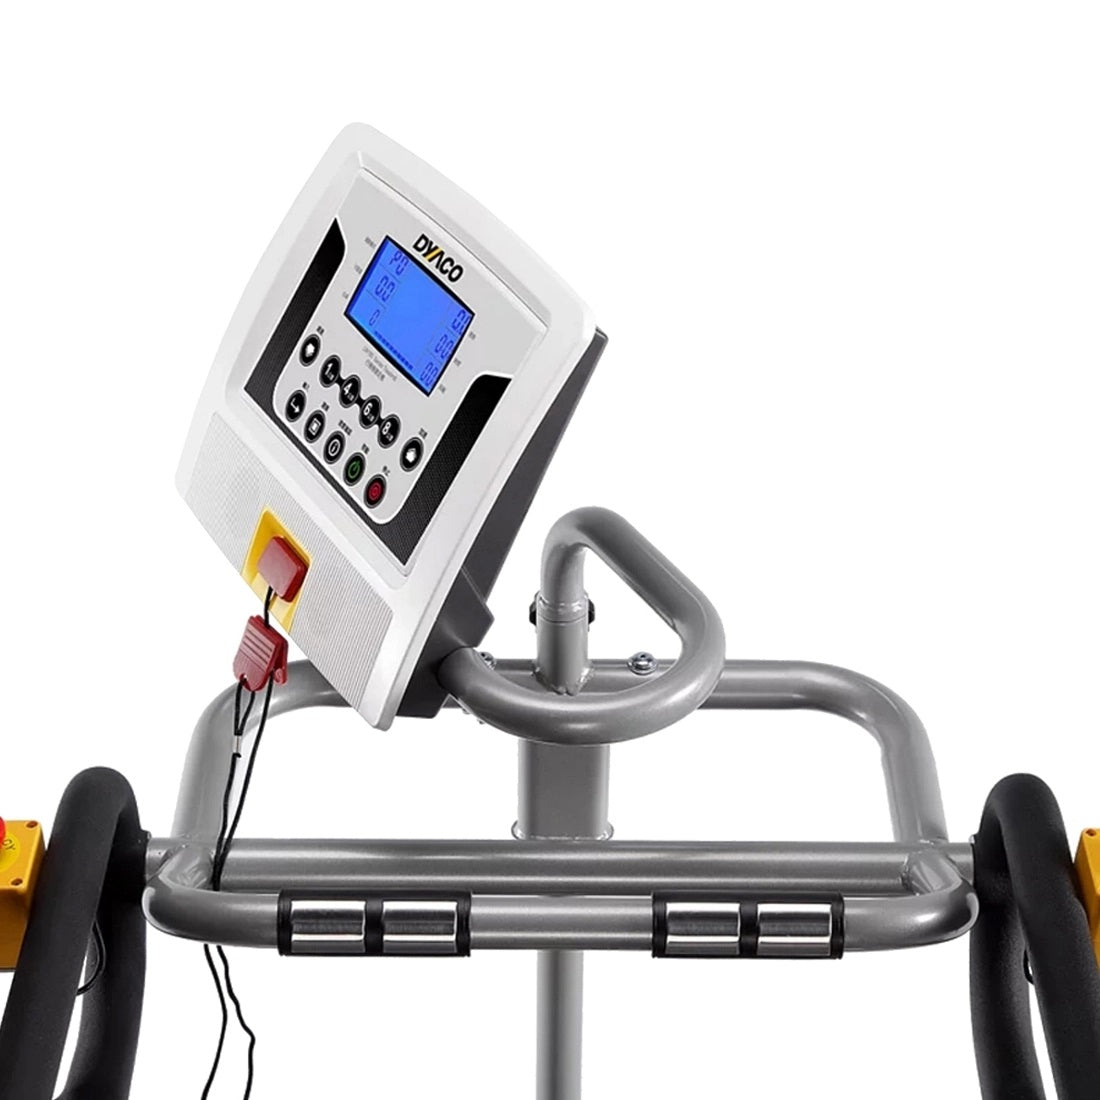 treadmill dyaco lw180 rotatable display